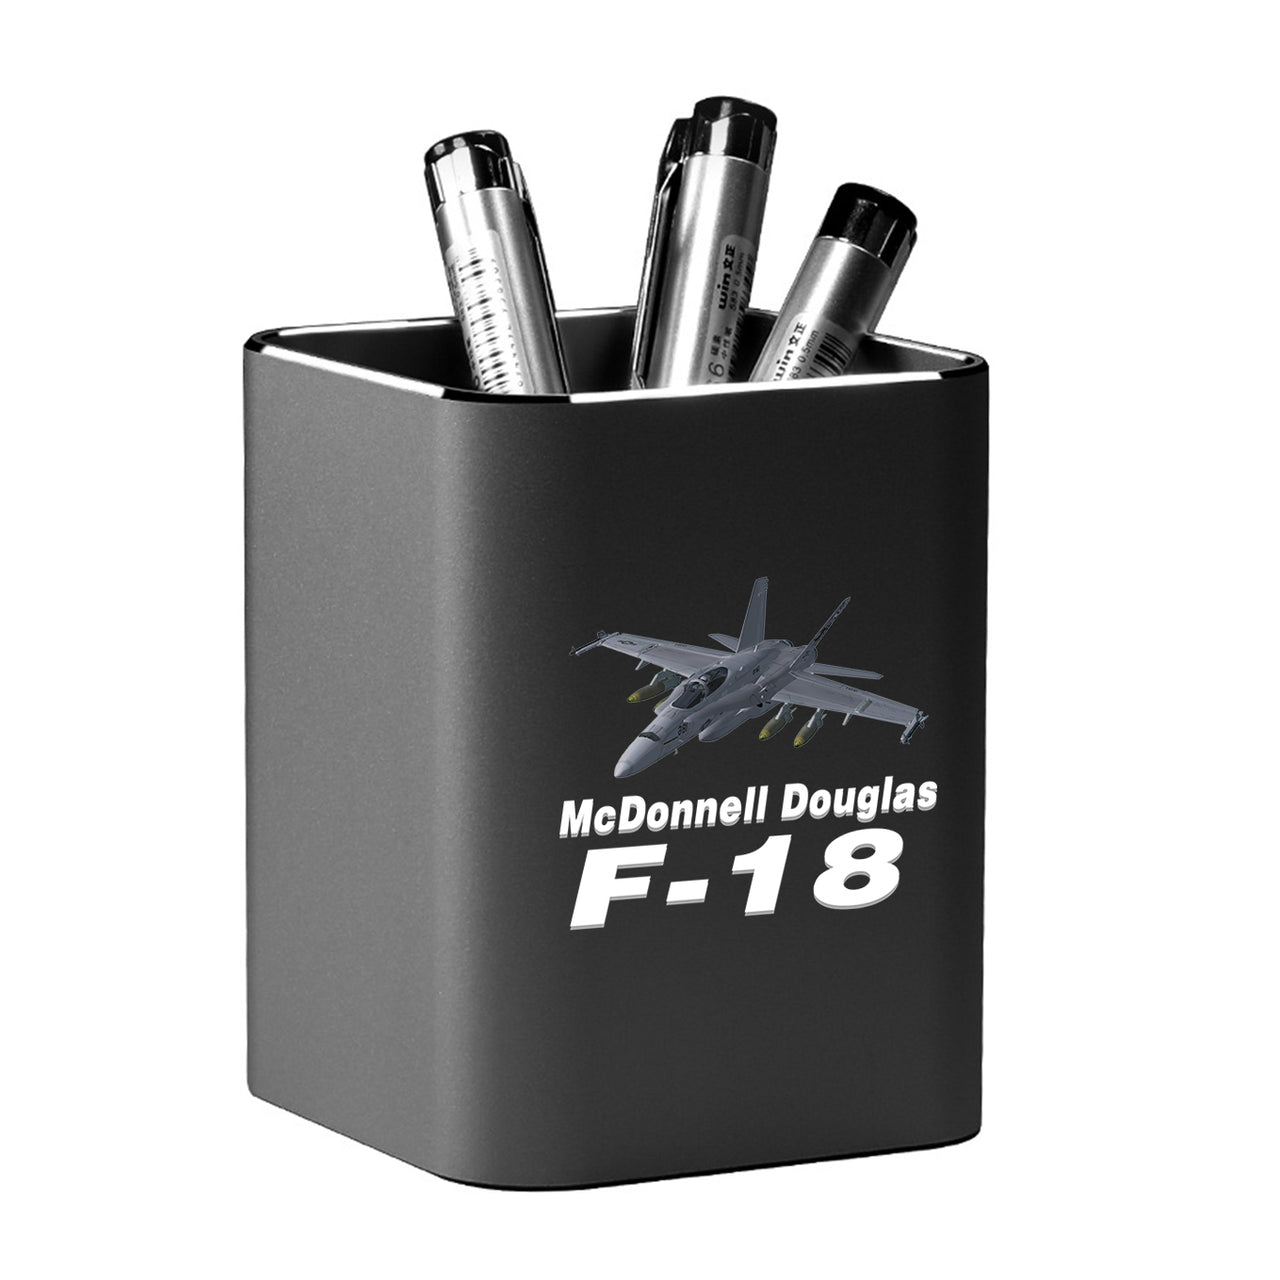 The McDonnell Douglas F18 Designed Aluminium Alloy Pen Holders